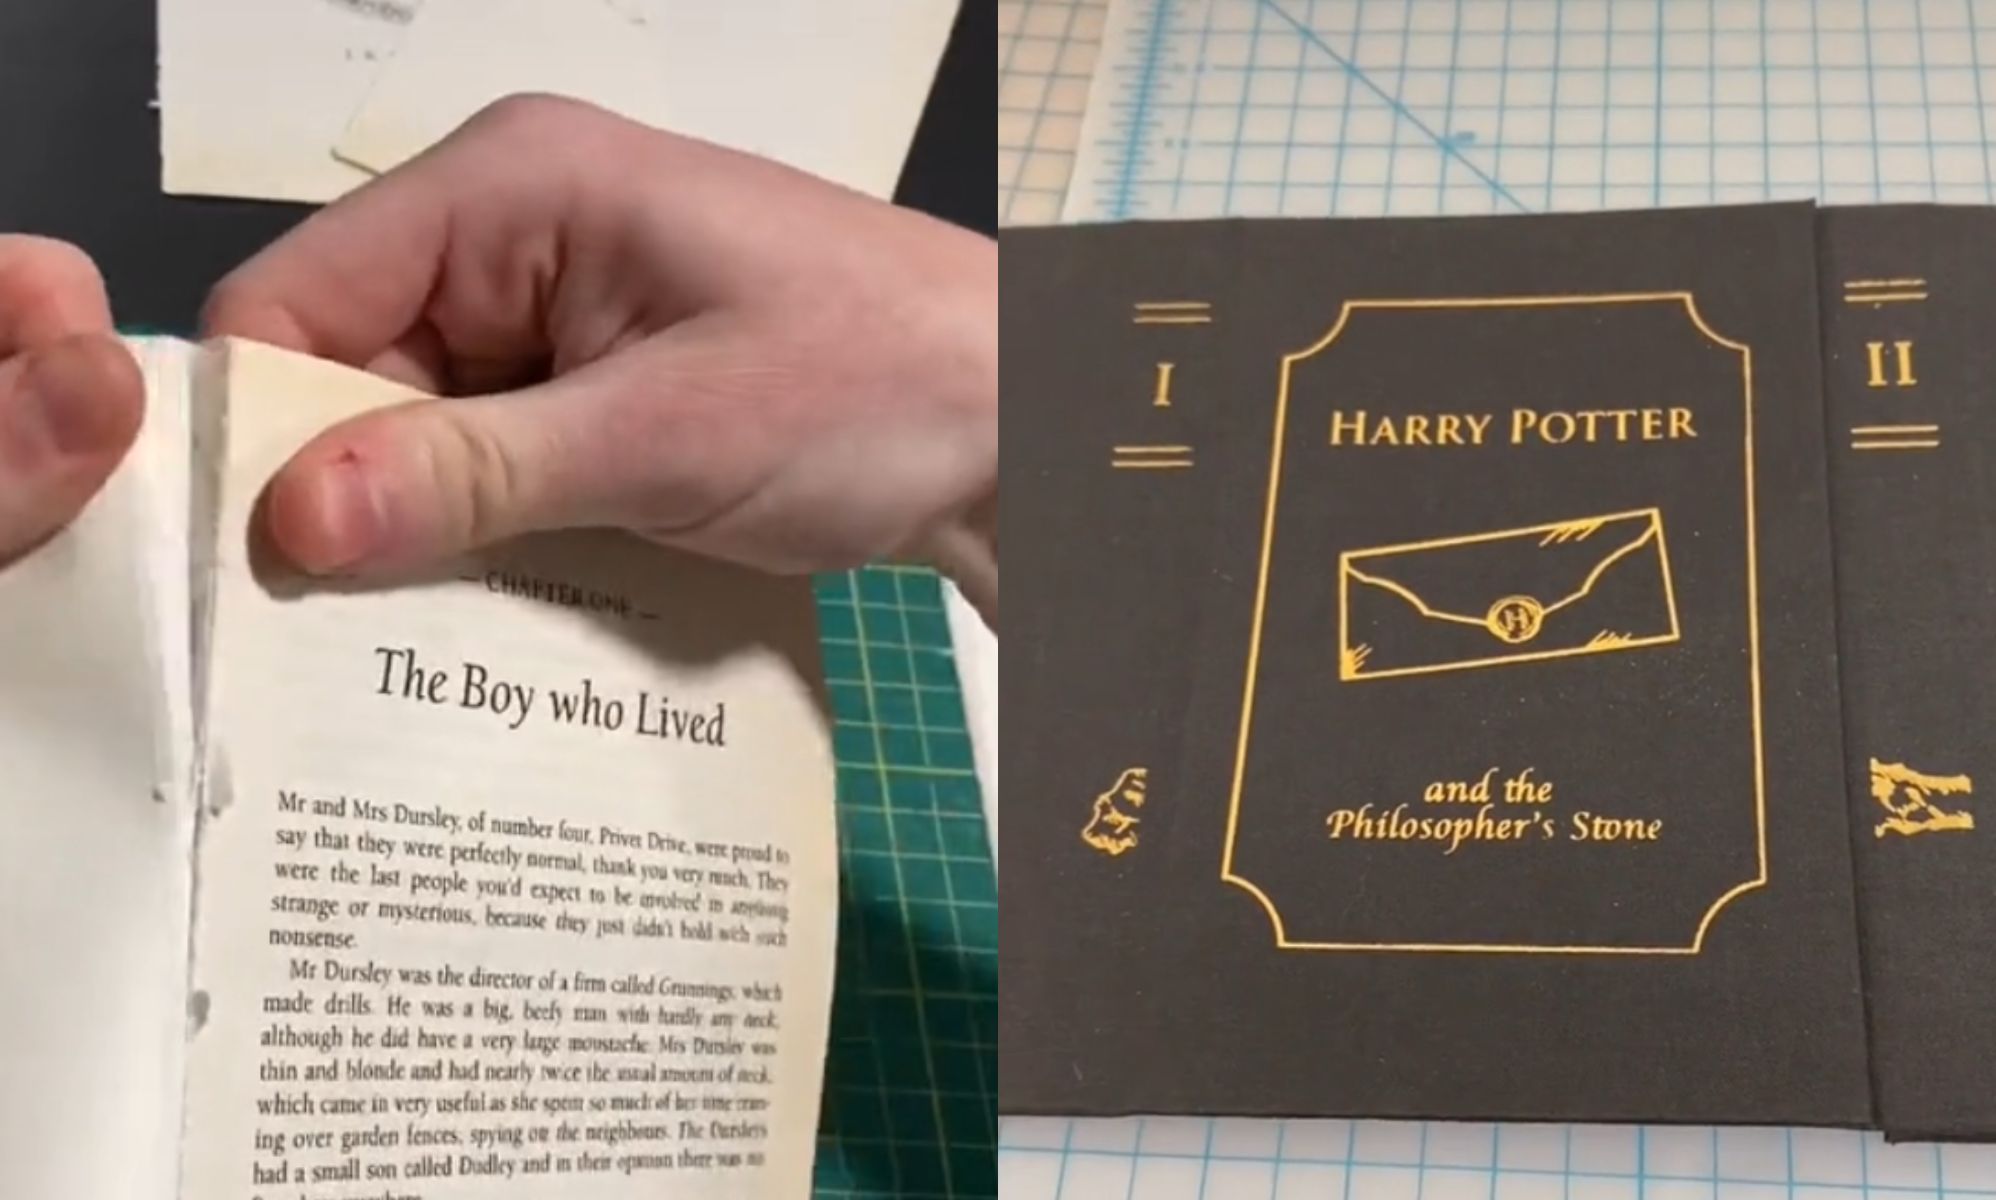 Un artista transexual revende libros de Harry Potter sin el nombre de JK Rowling